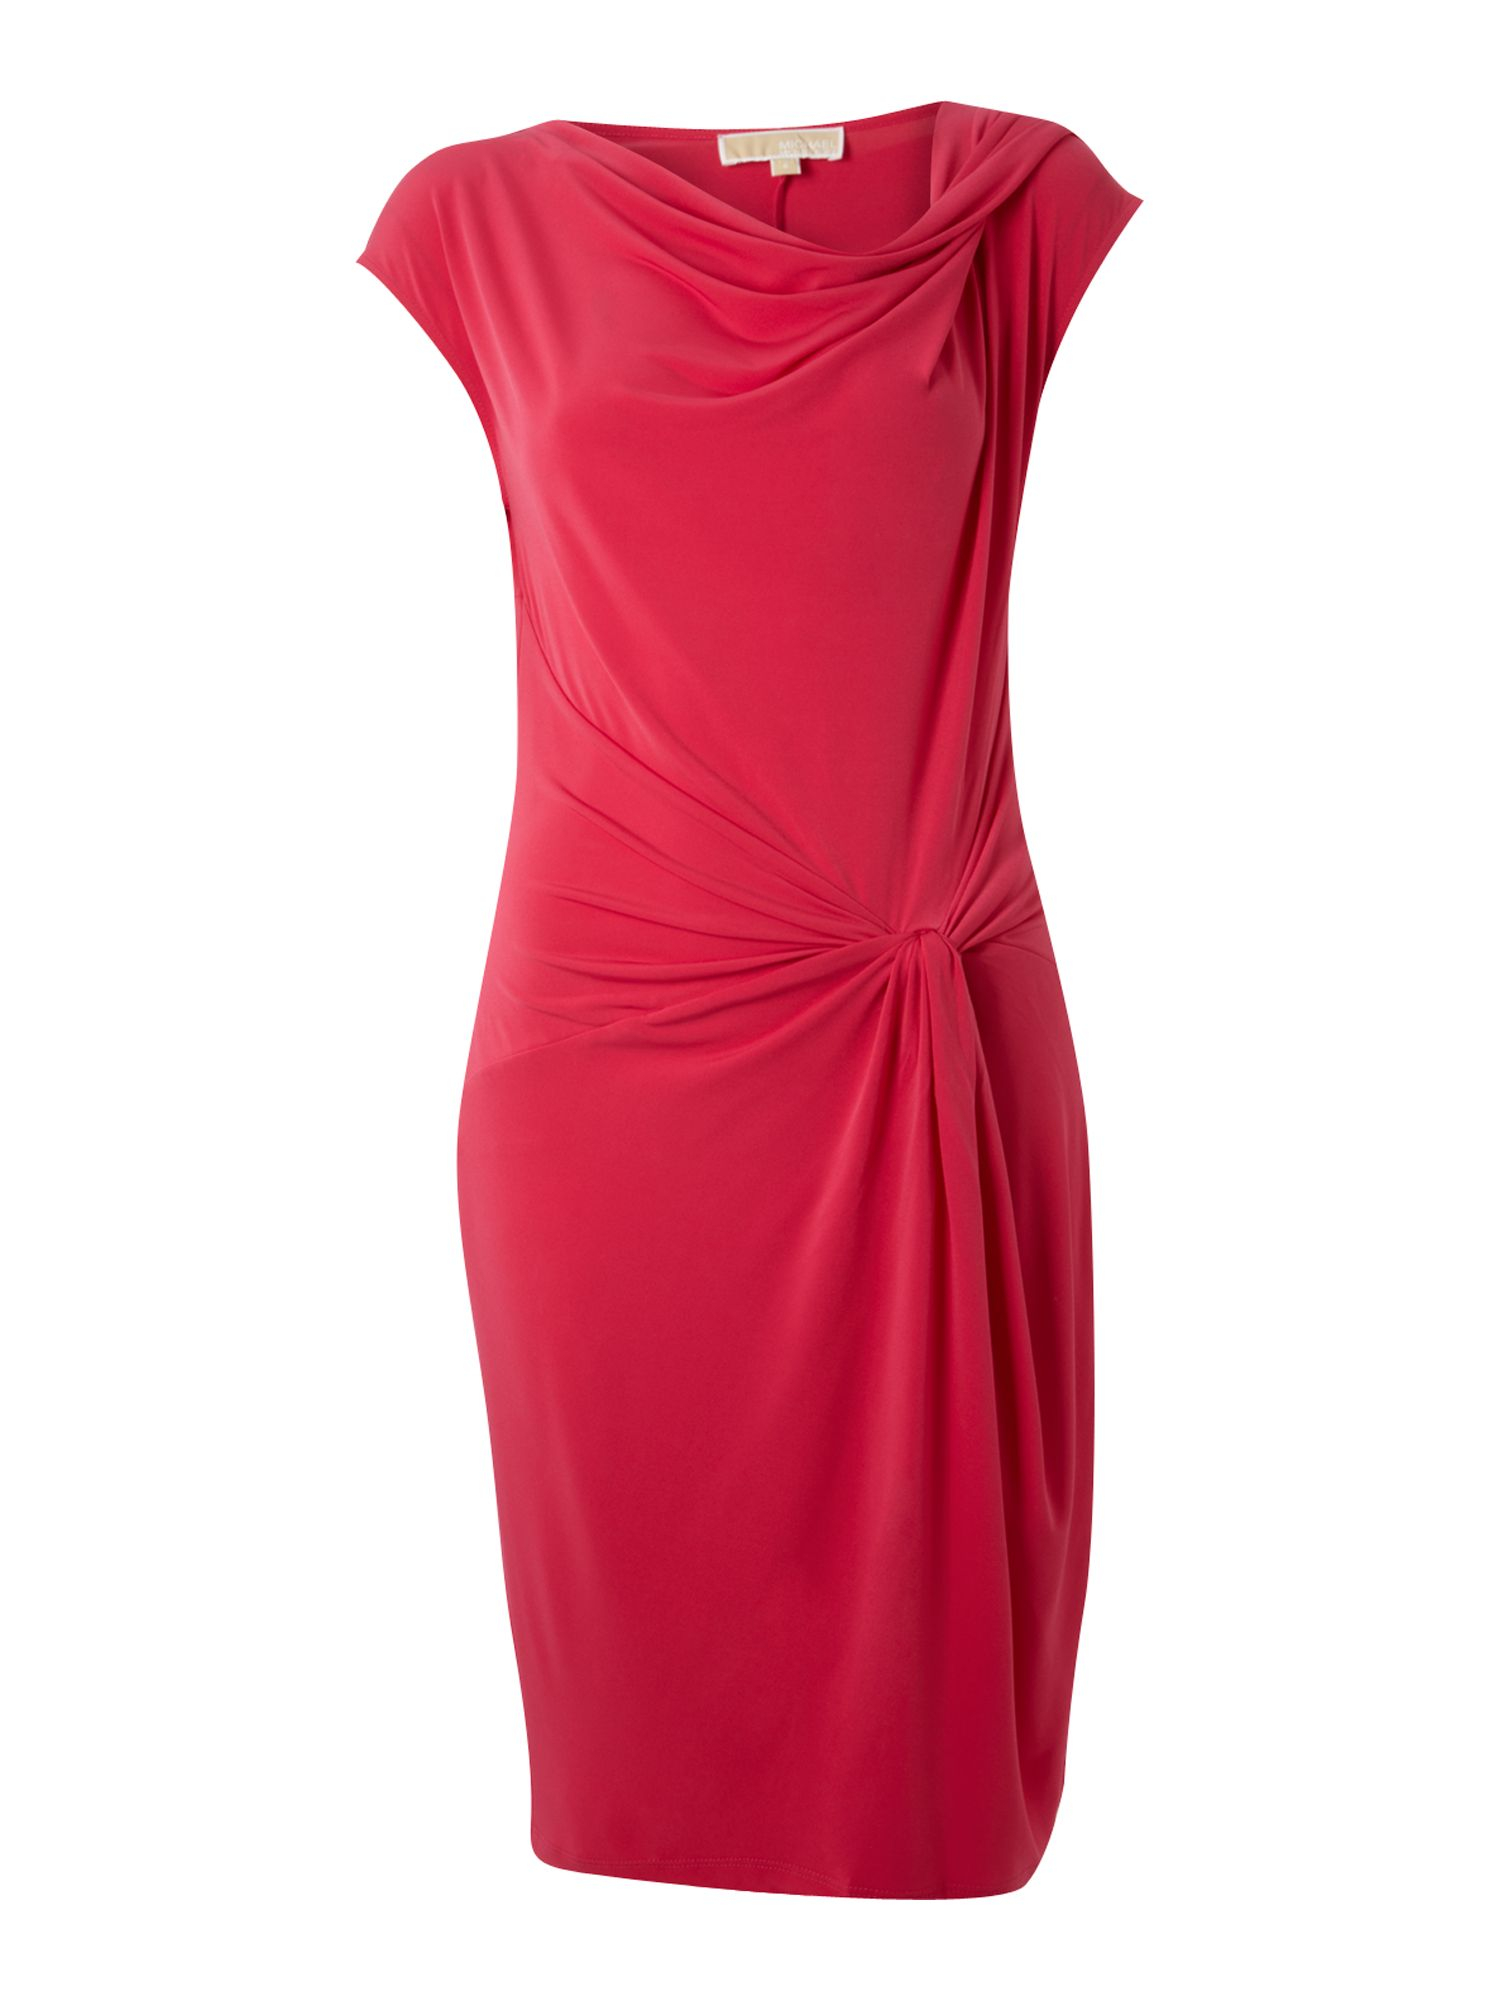 Michael kors Twist Front Dress in Pink | Lyst